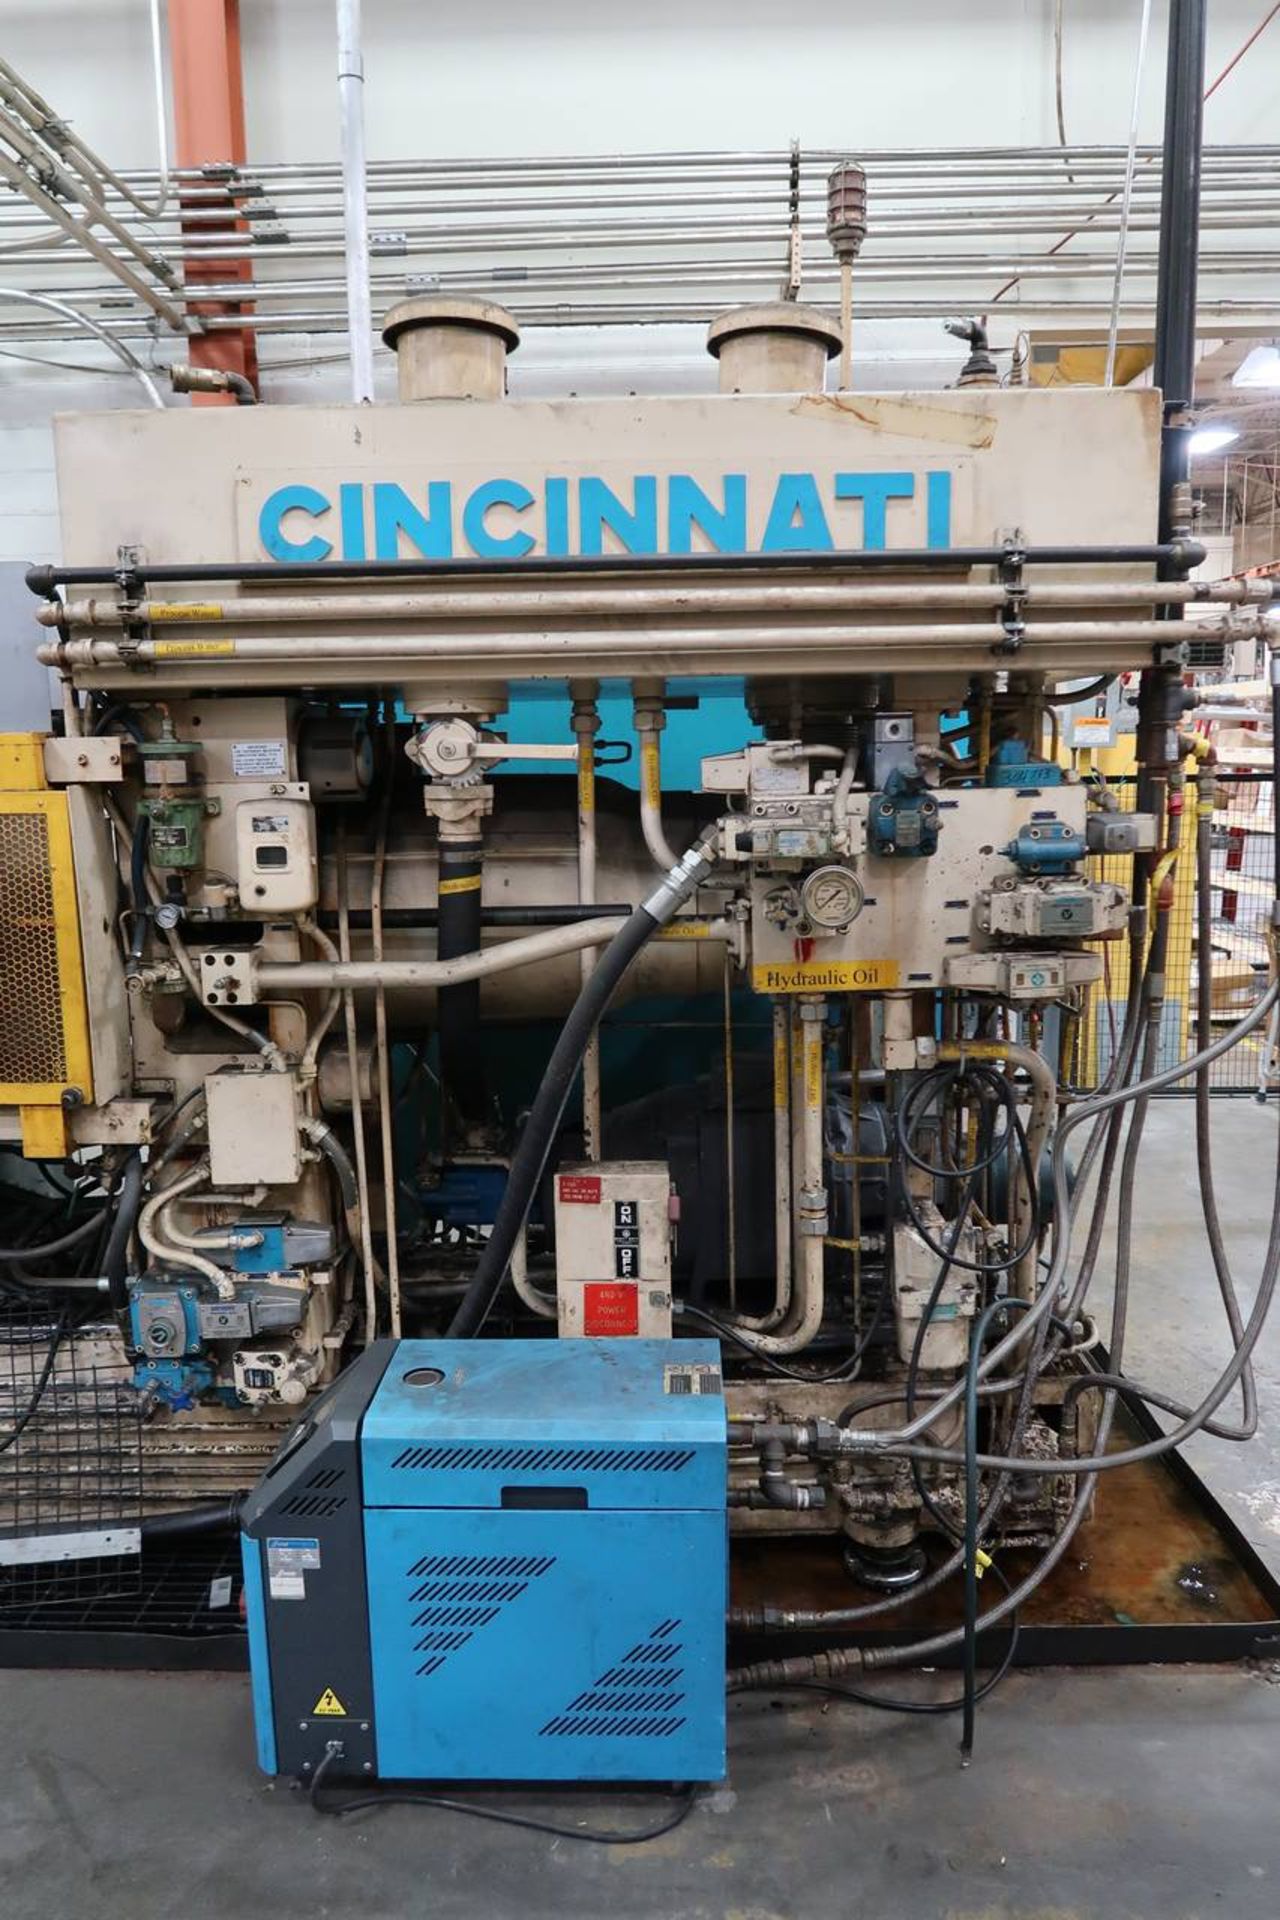 Cincinnati-Milacron 250T 250-Ton Thermo Plastic Injection Molding Press - Image 19 of 46